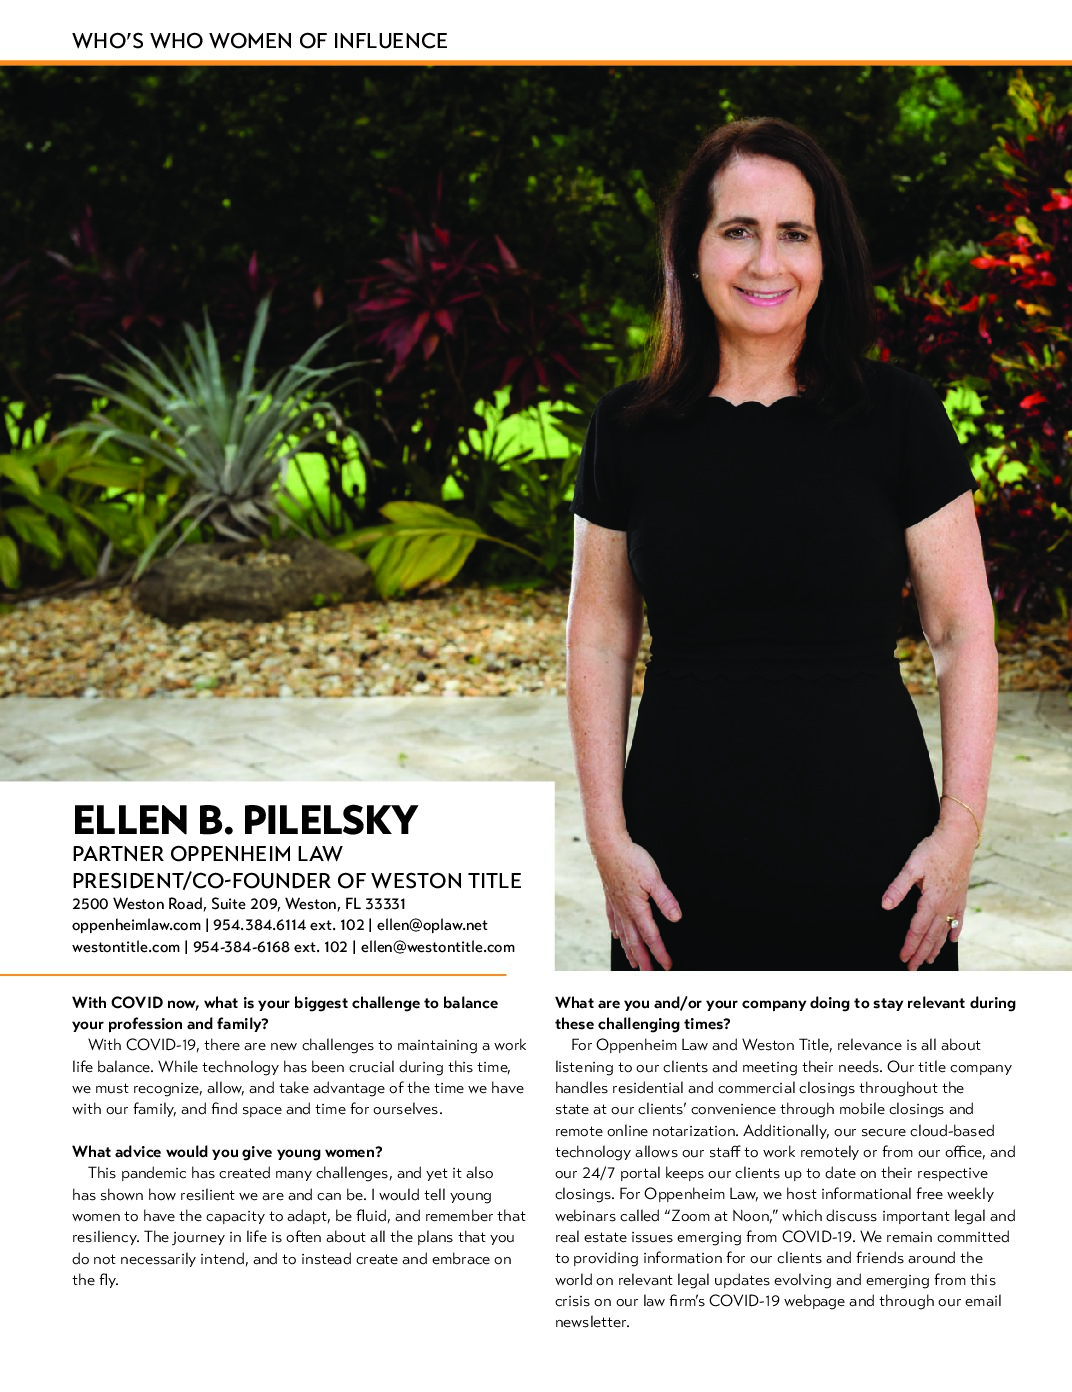 Ellen Pilelsky WOI Profile (3)